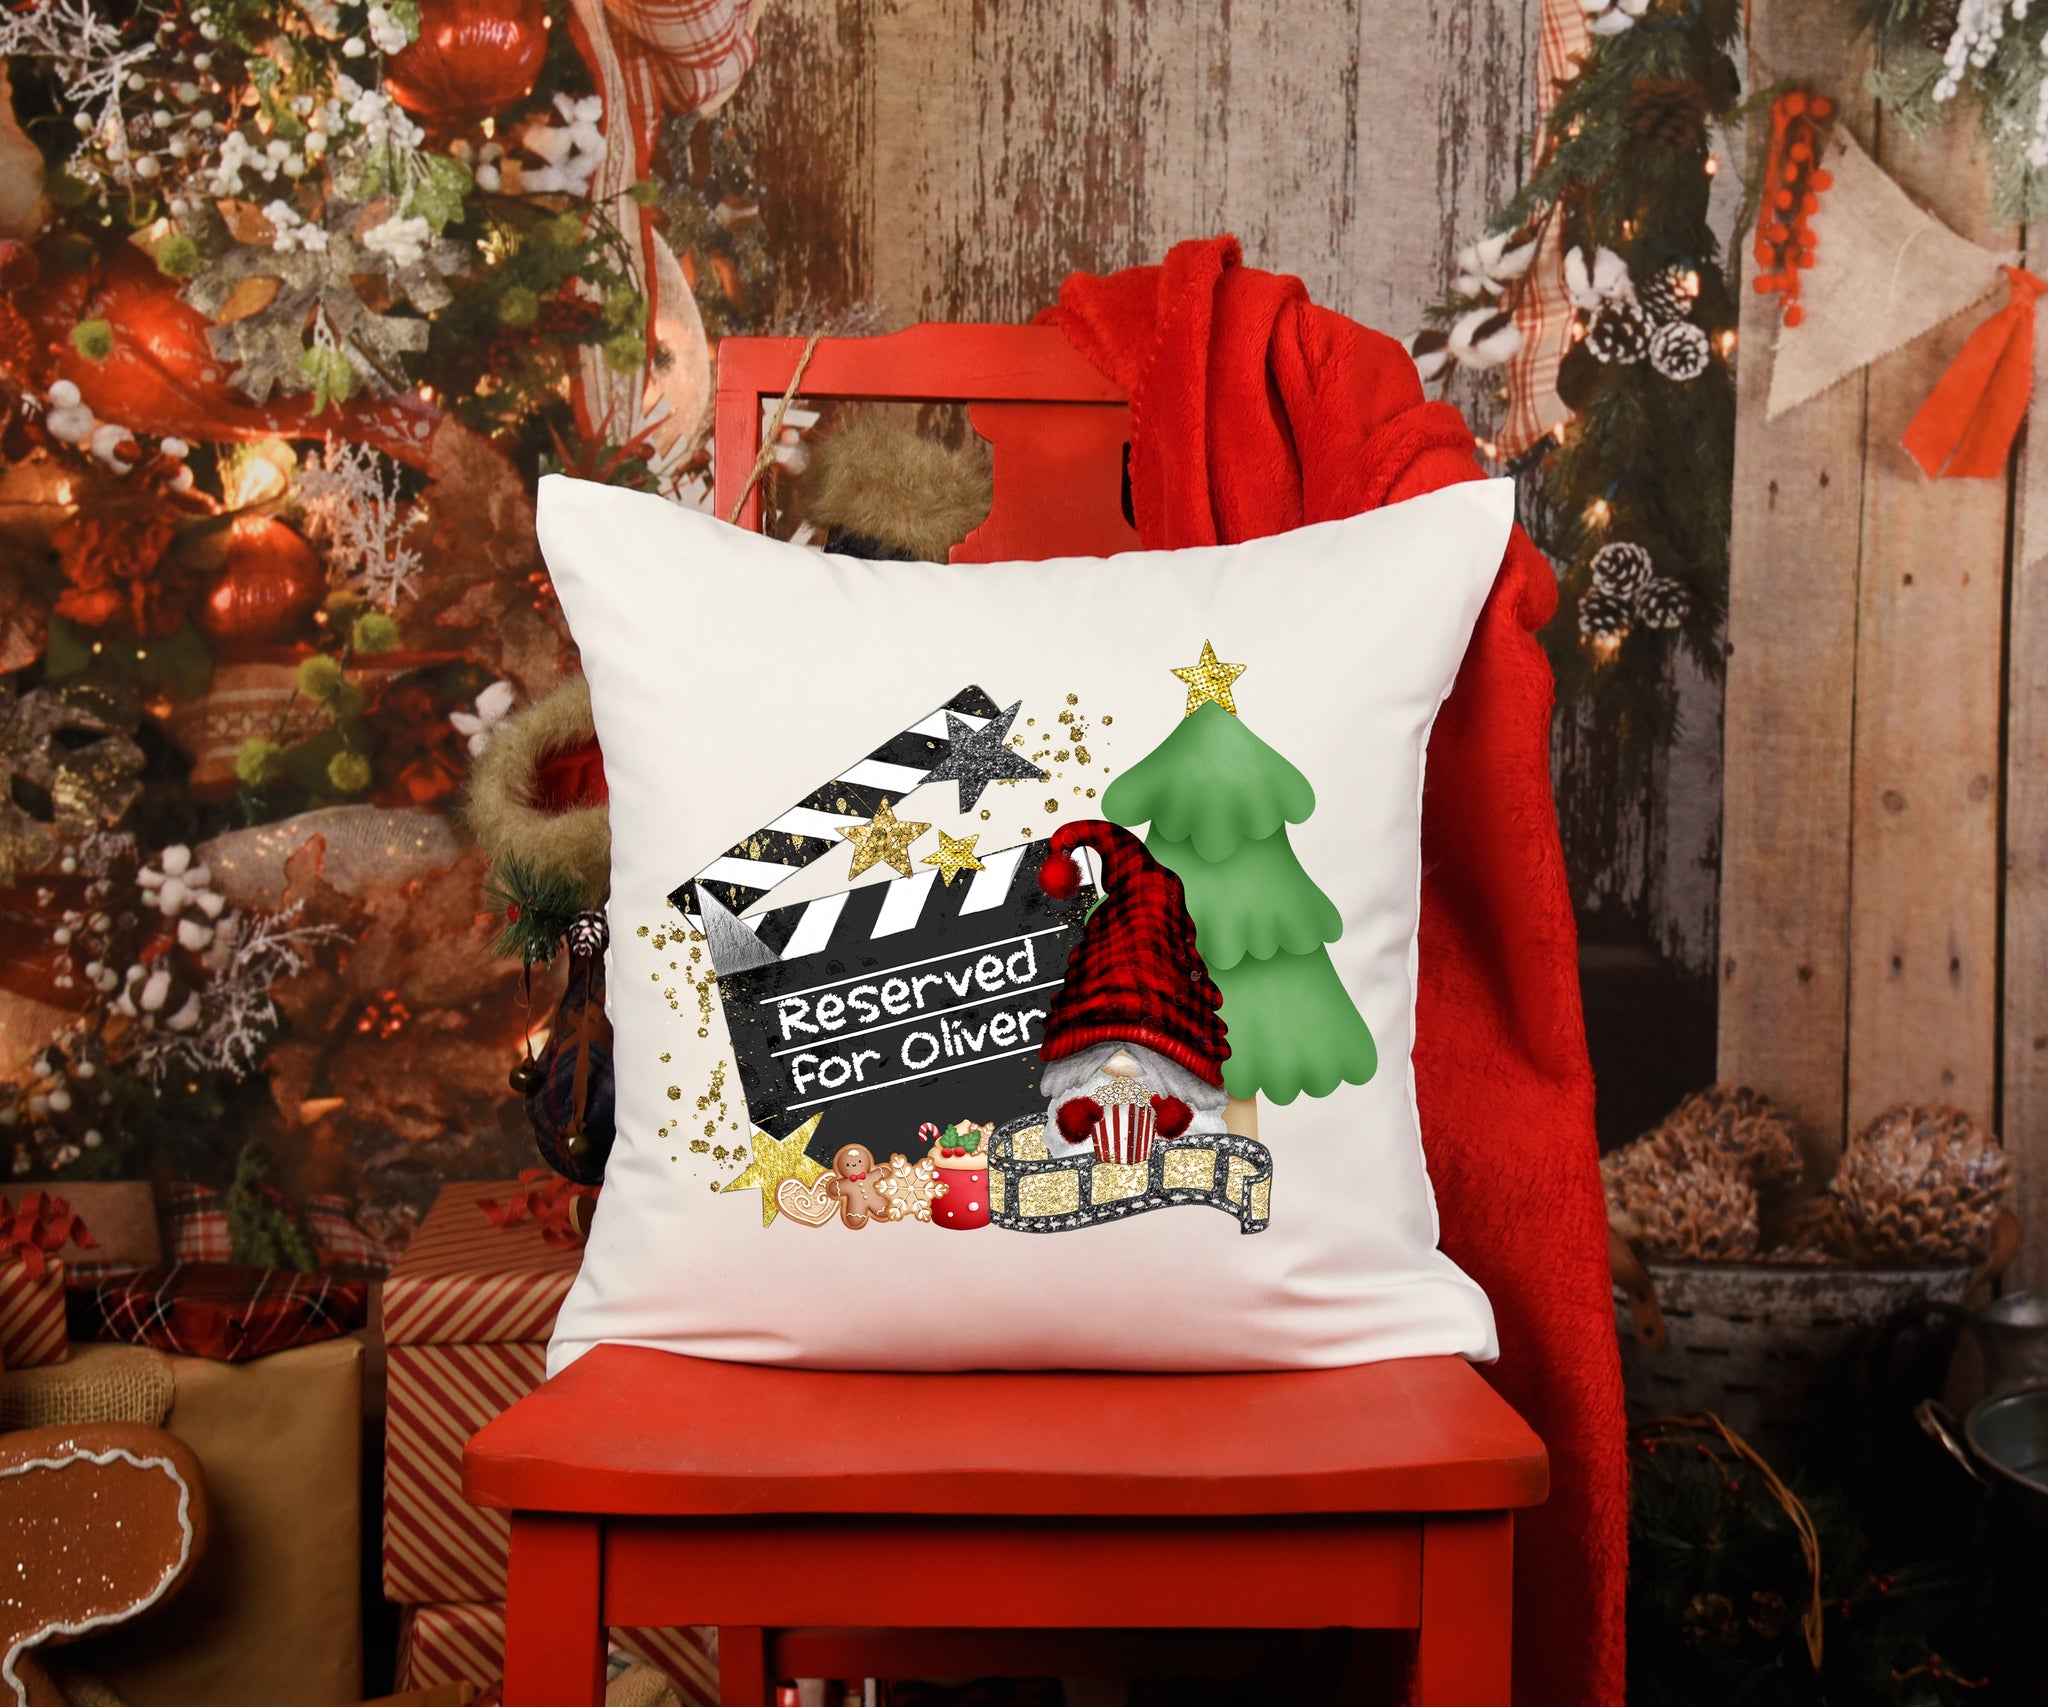 Personalised Christmas Movie Cushion